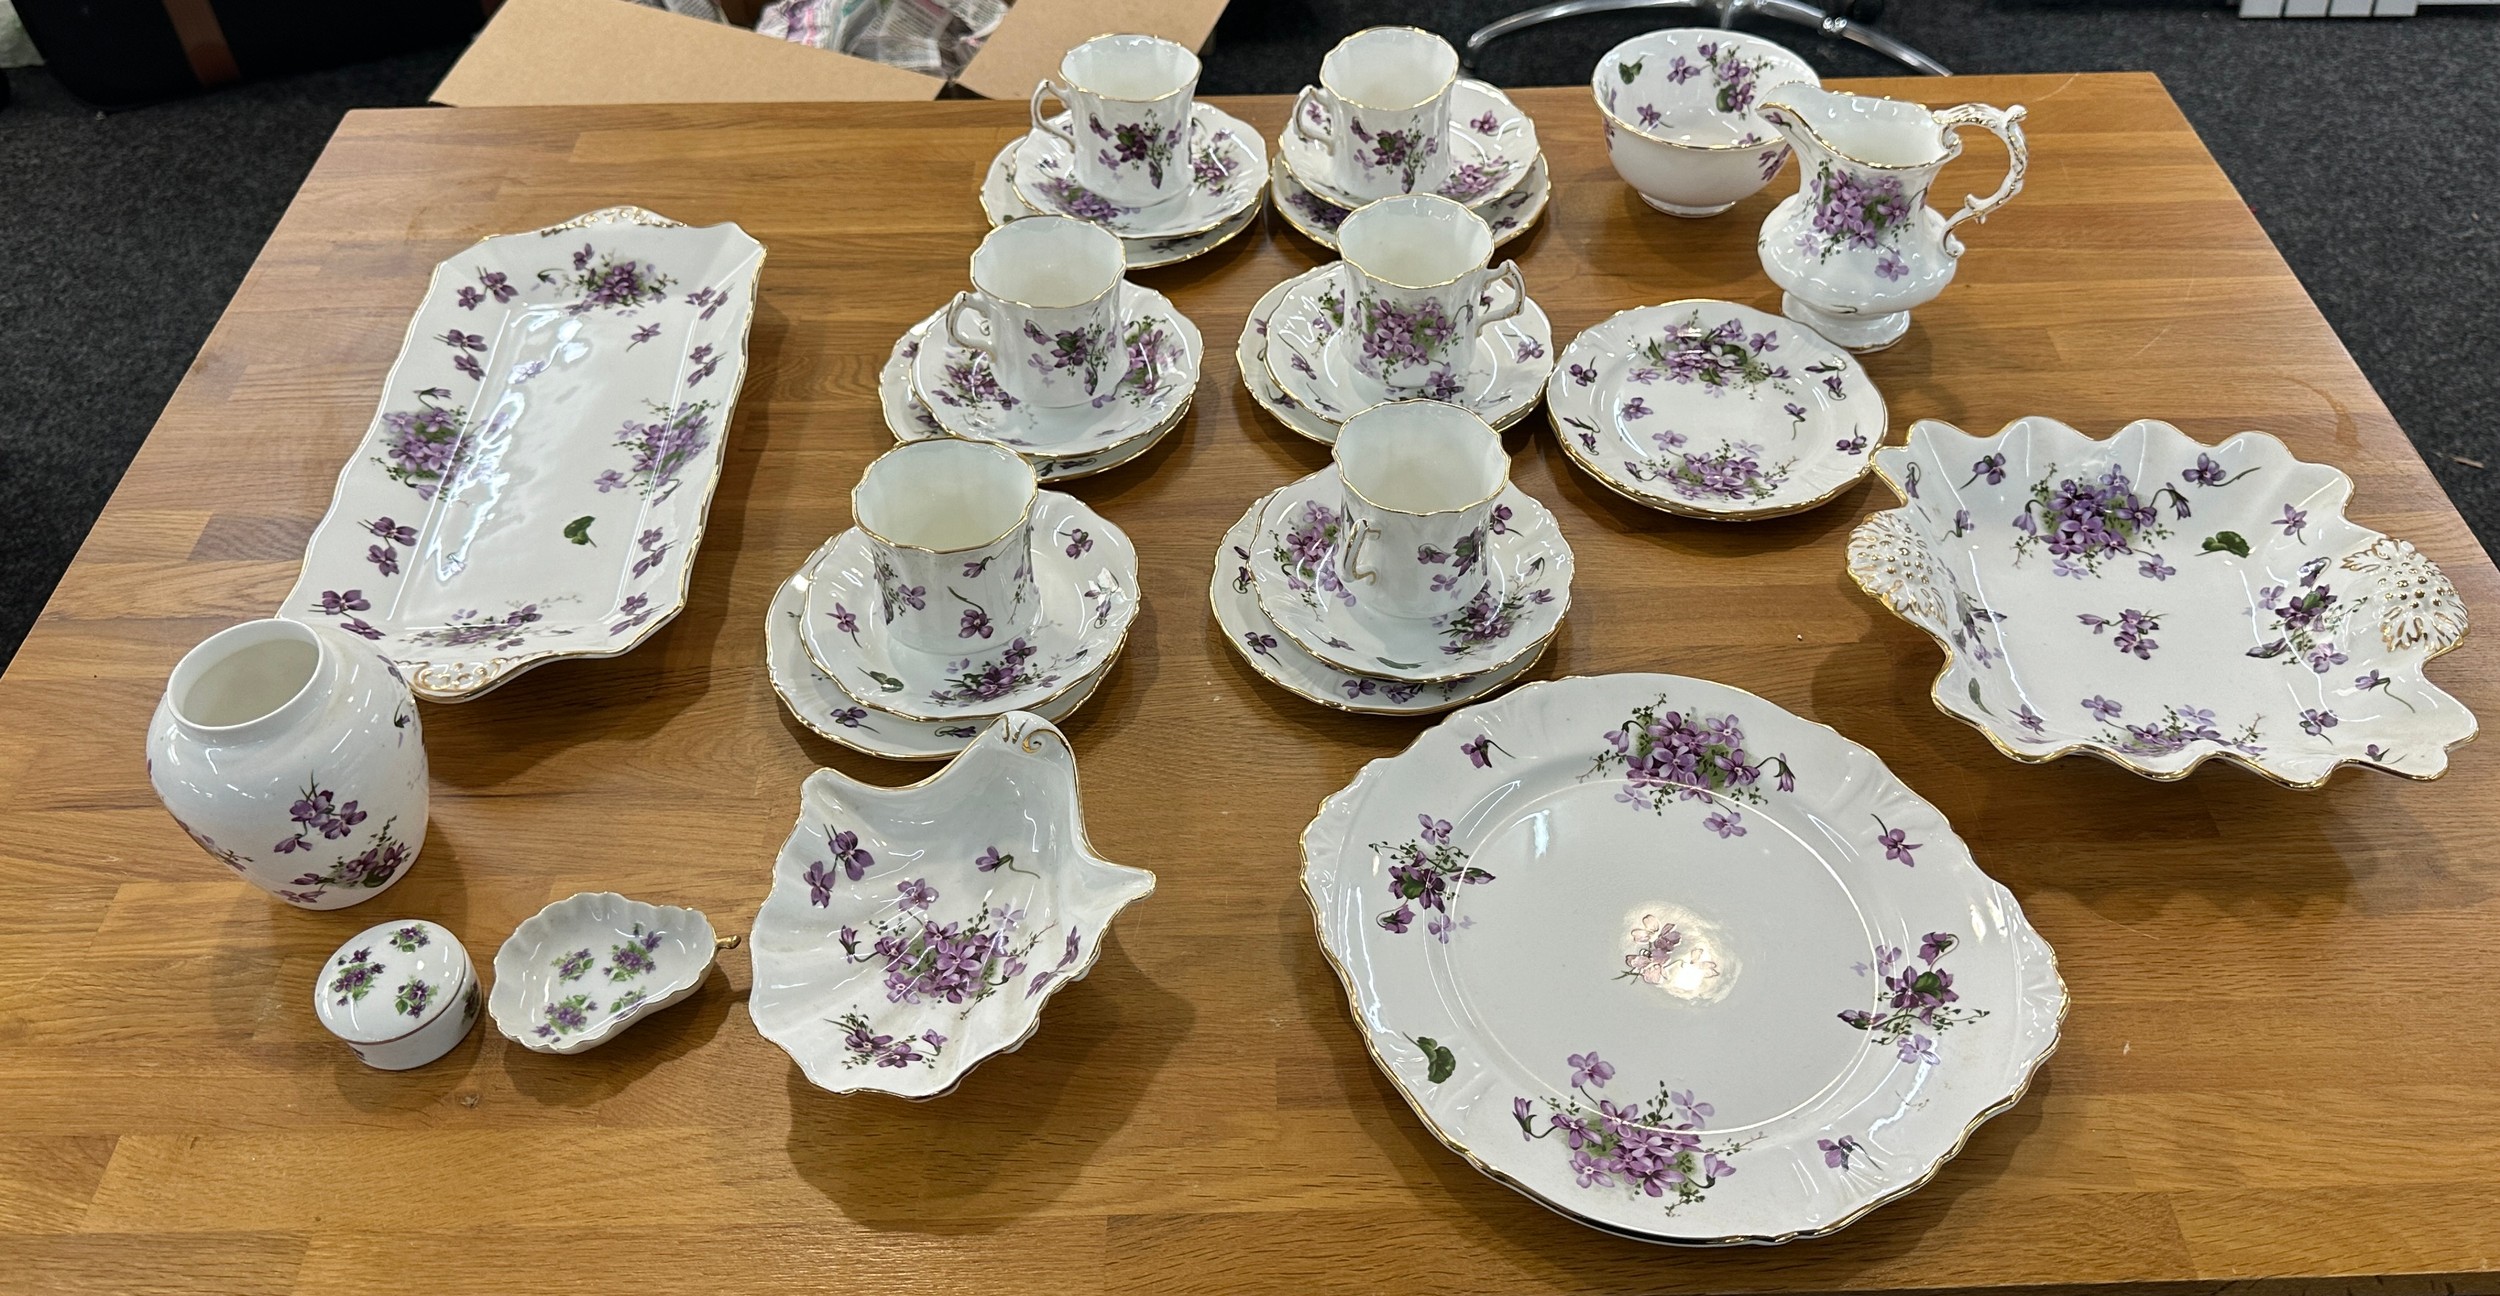 Six piece part Hammersley tea service victorian violets includes cups, saucers, milk jug etc